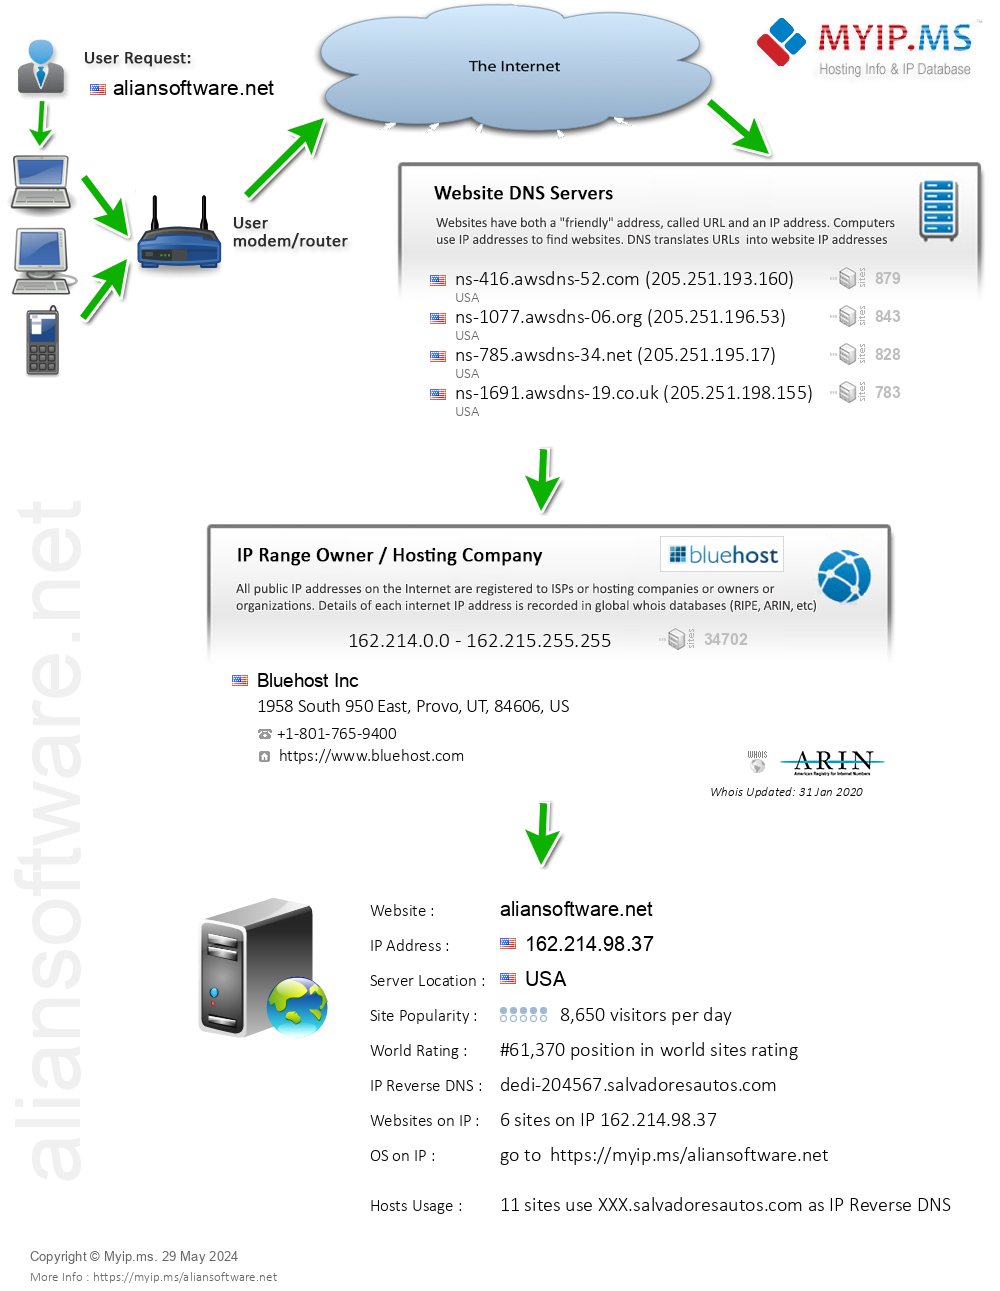 Aliansoftware.net - Website Hosting Visual IP Diagram